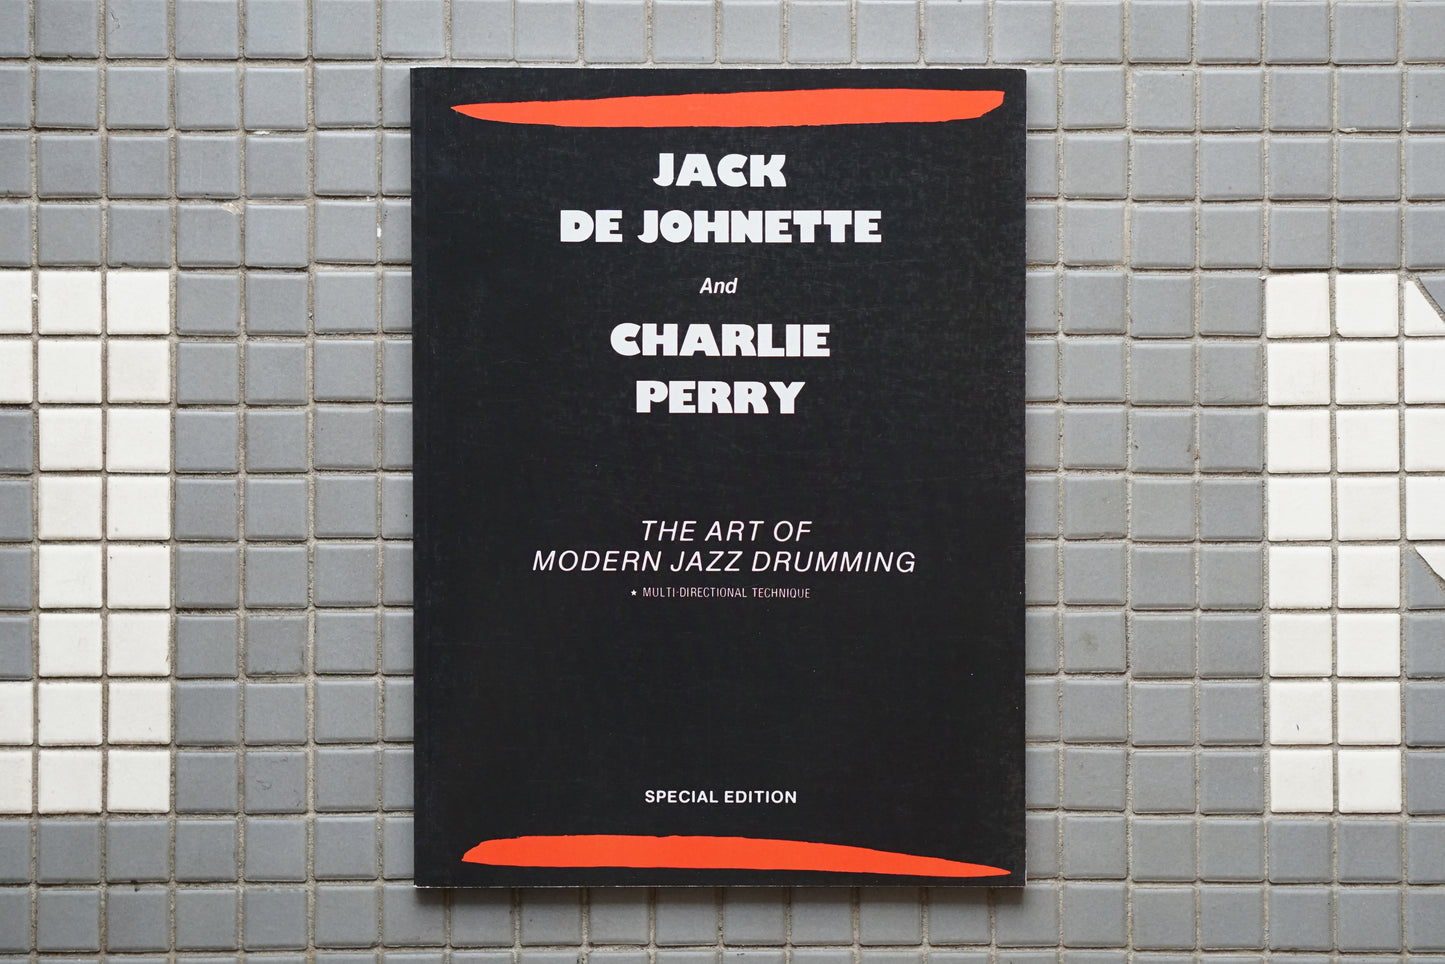 The Art of Modern Jazz Drumming - Jack DeJohnette/Charlie Perry